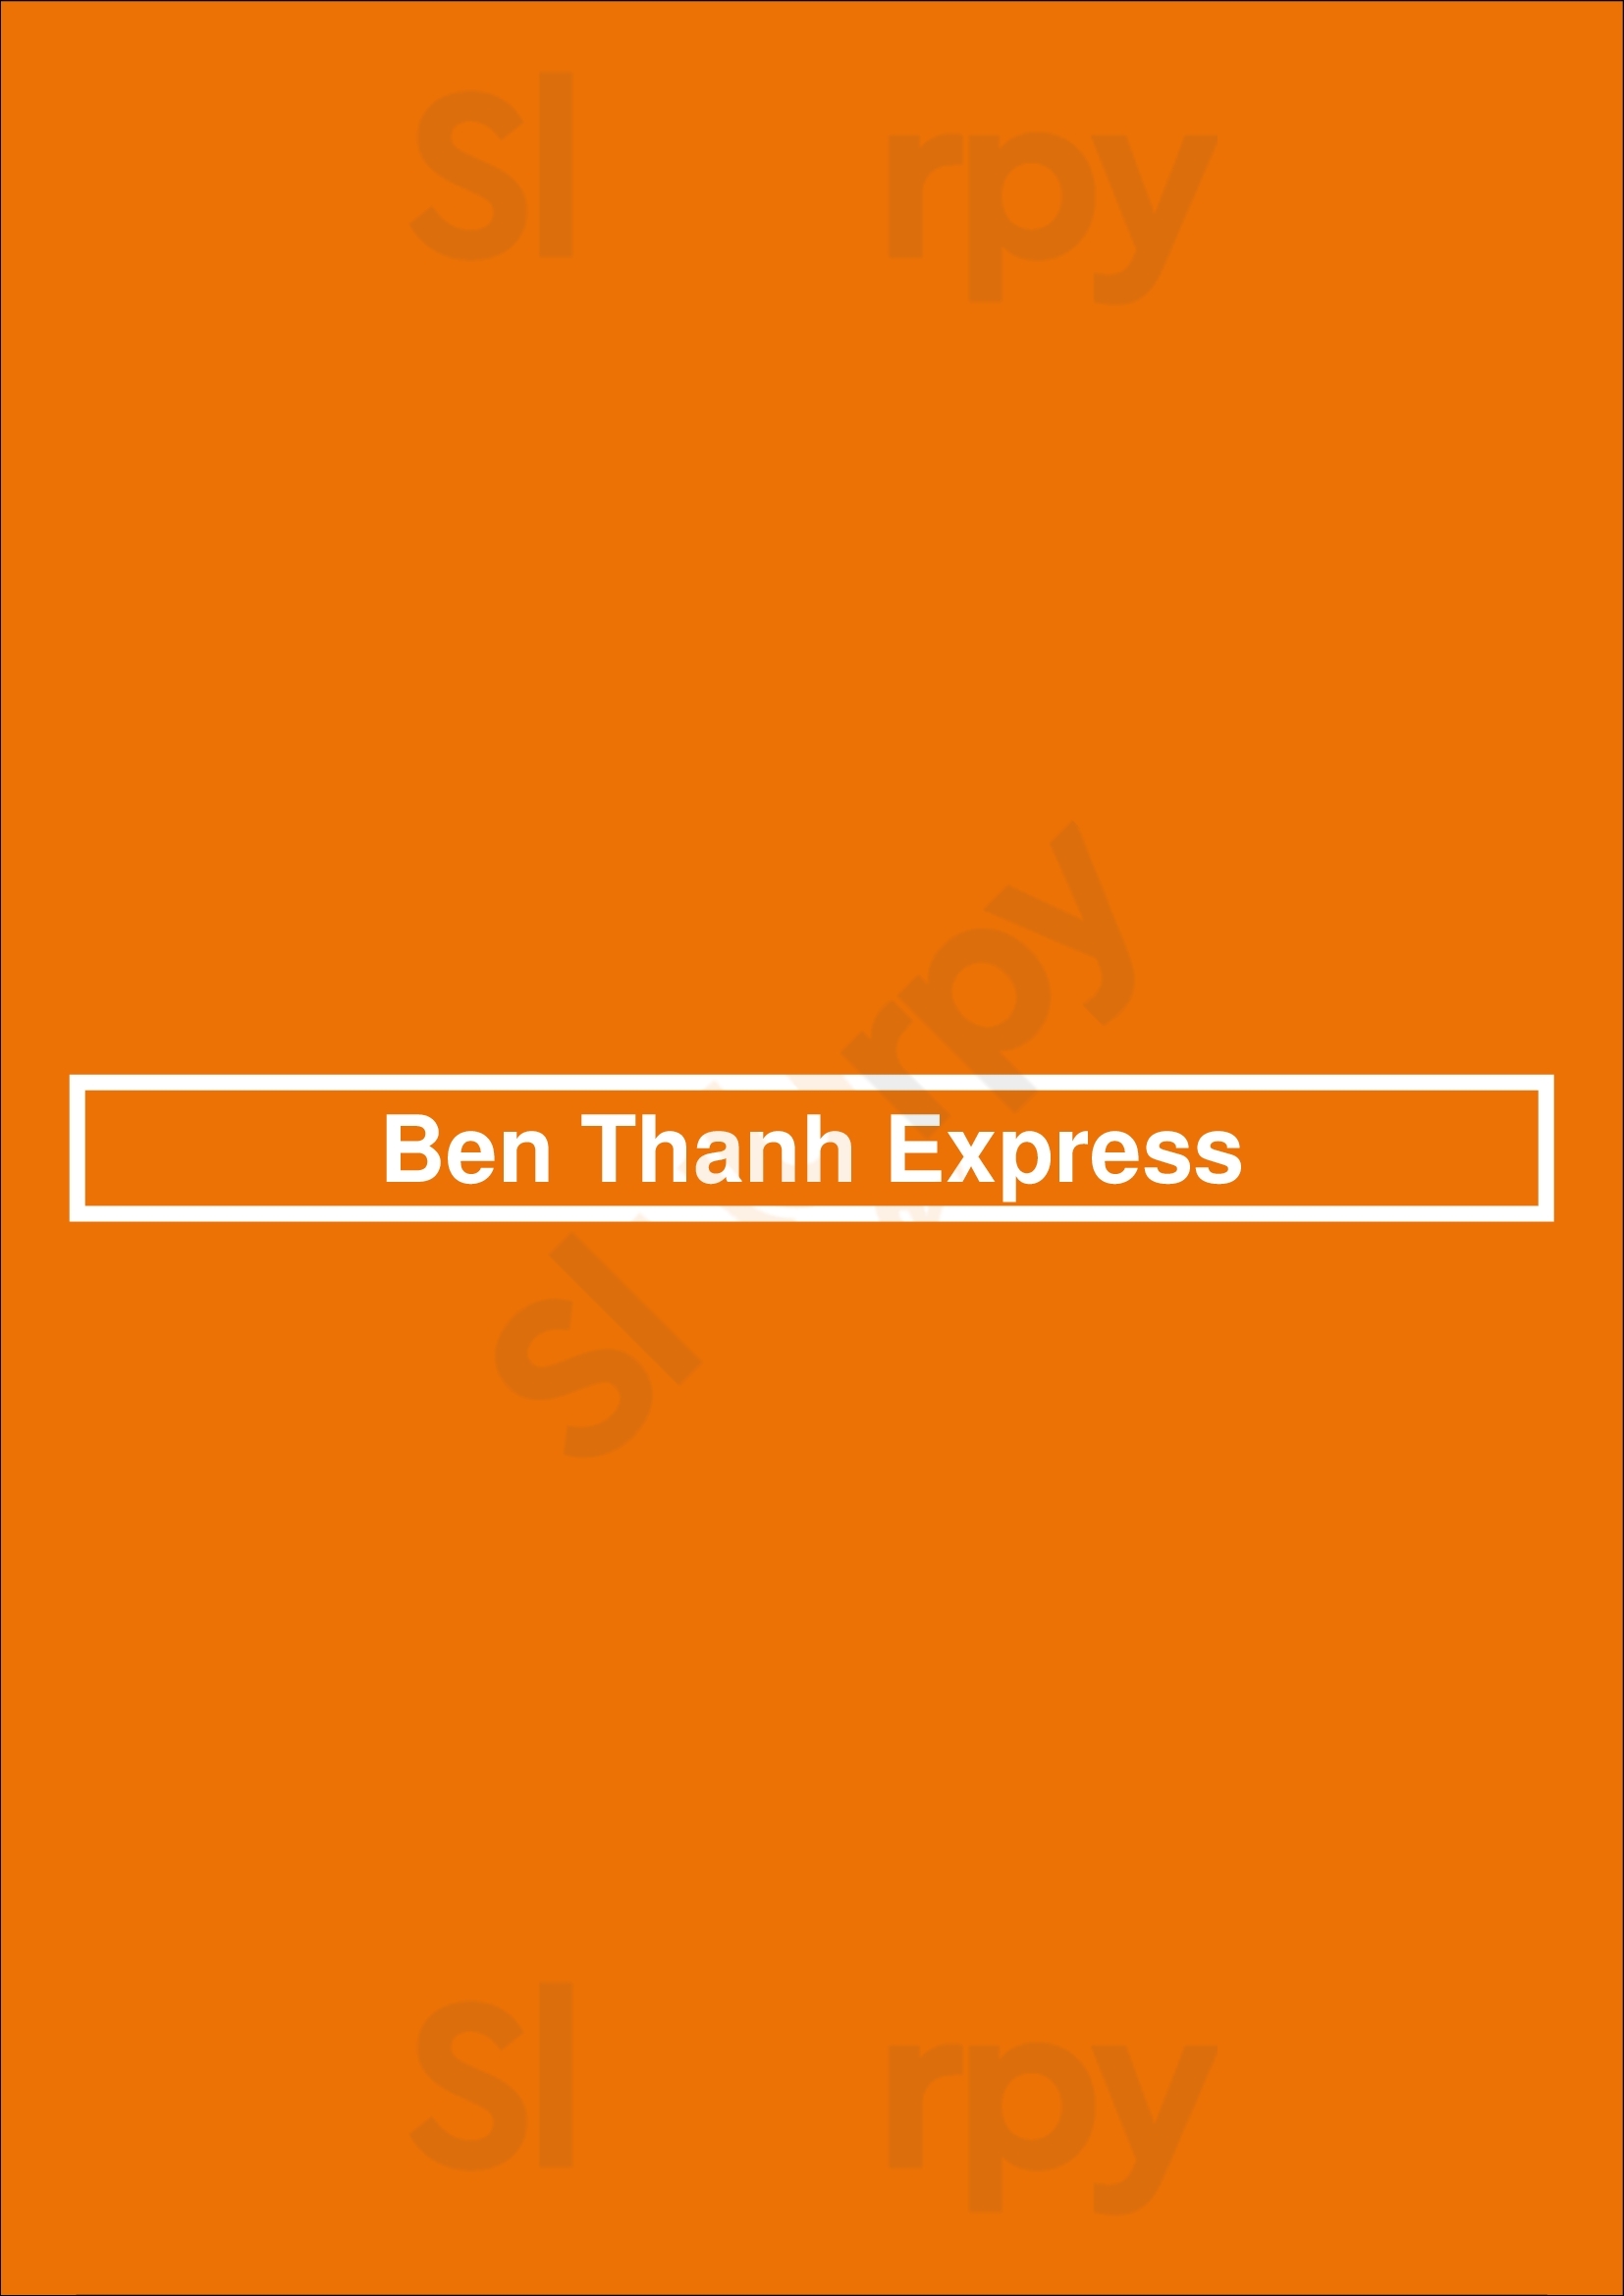 Ben Thanh Express London Menu - 1